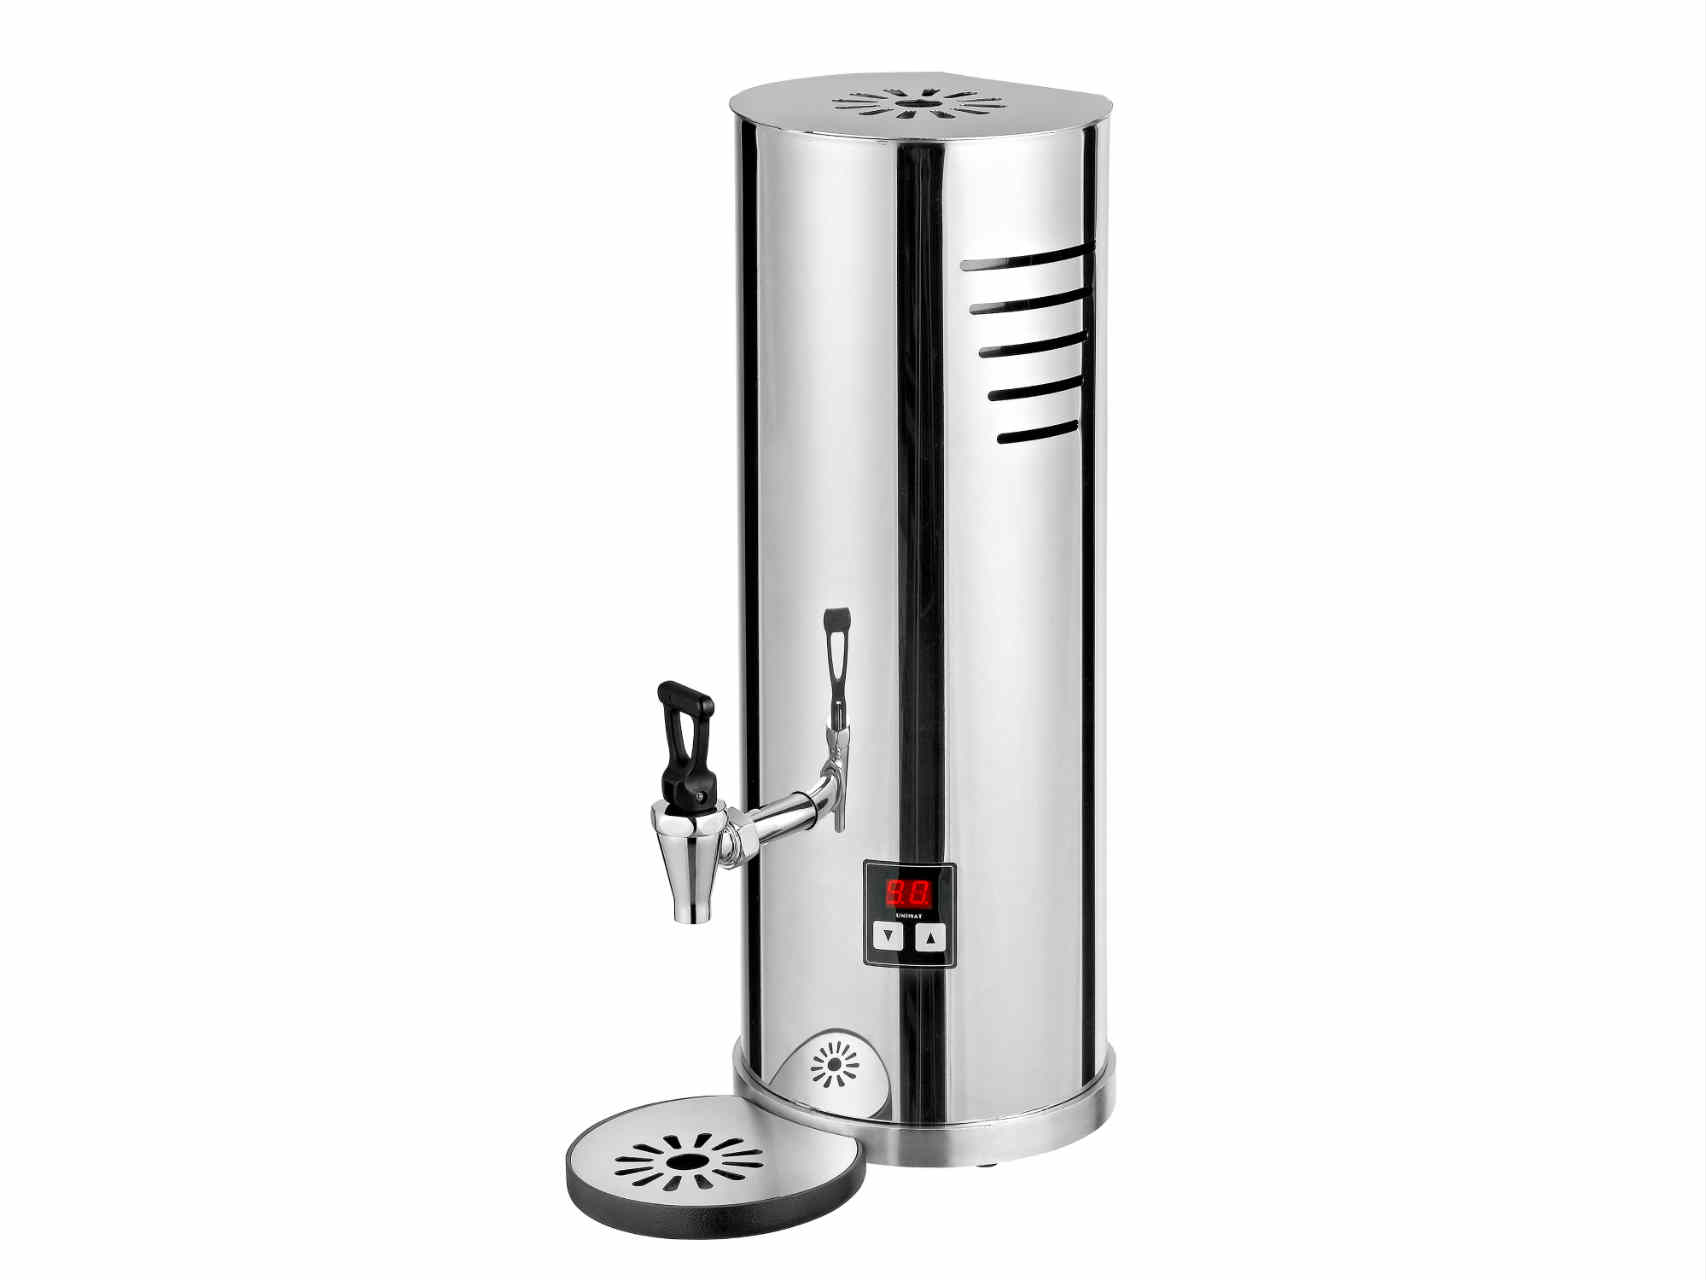 UNIMMAT Heißwasserbereiter Frankfurt Teemaschine Teeautomat, ) (2100 Watt, Samowar